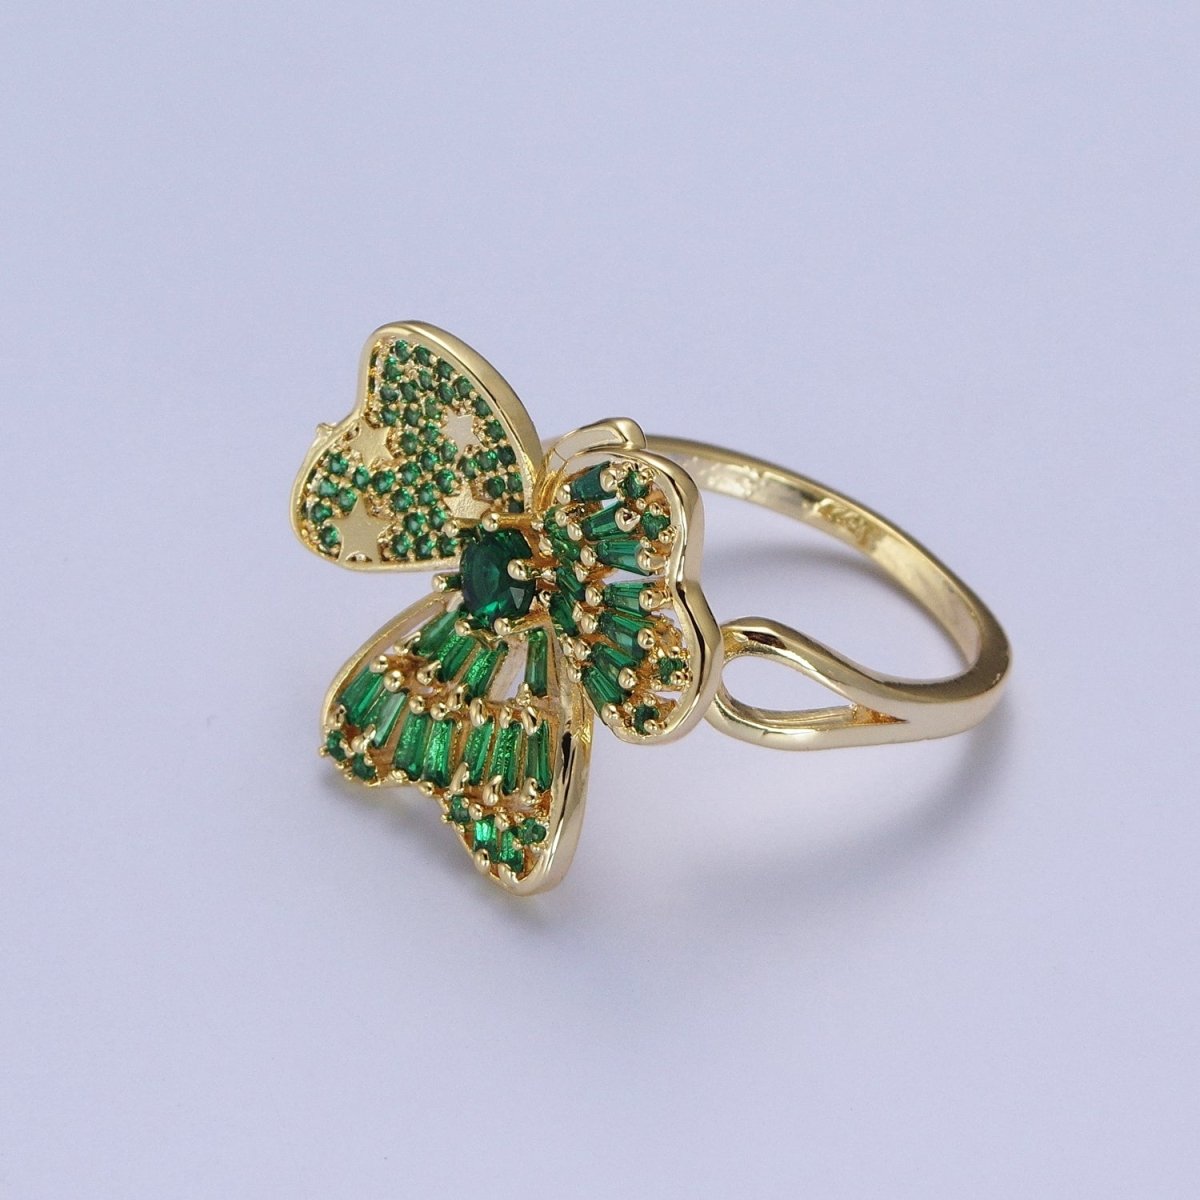 24K Gold Filled Minimalist Green Bow Flower Clover Heart Green Baguette Ring S-241 - DLUXCA